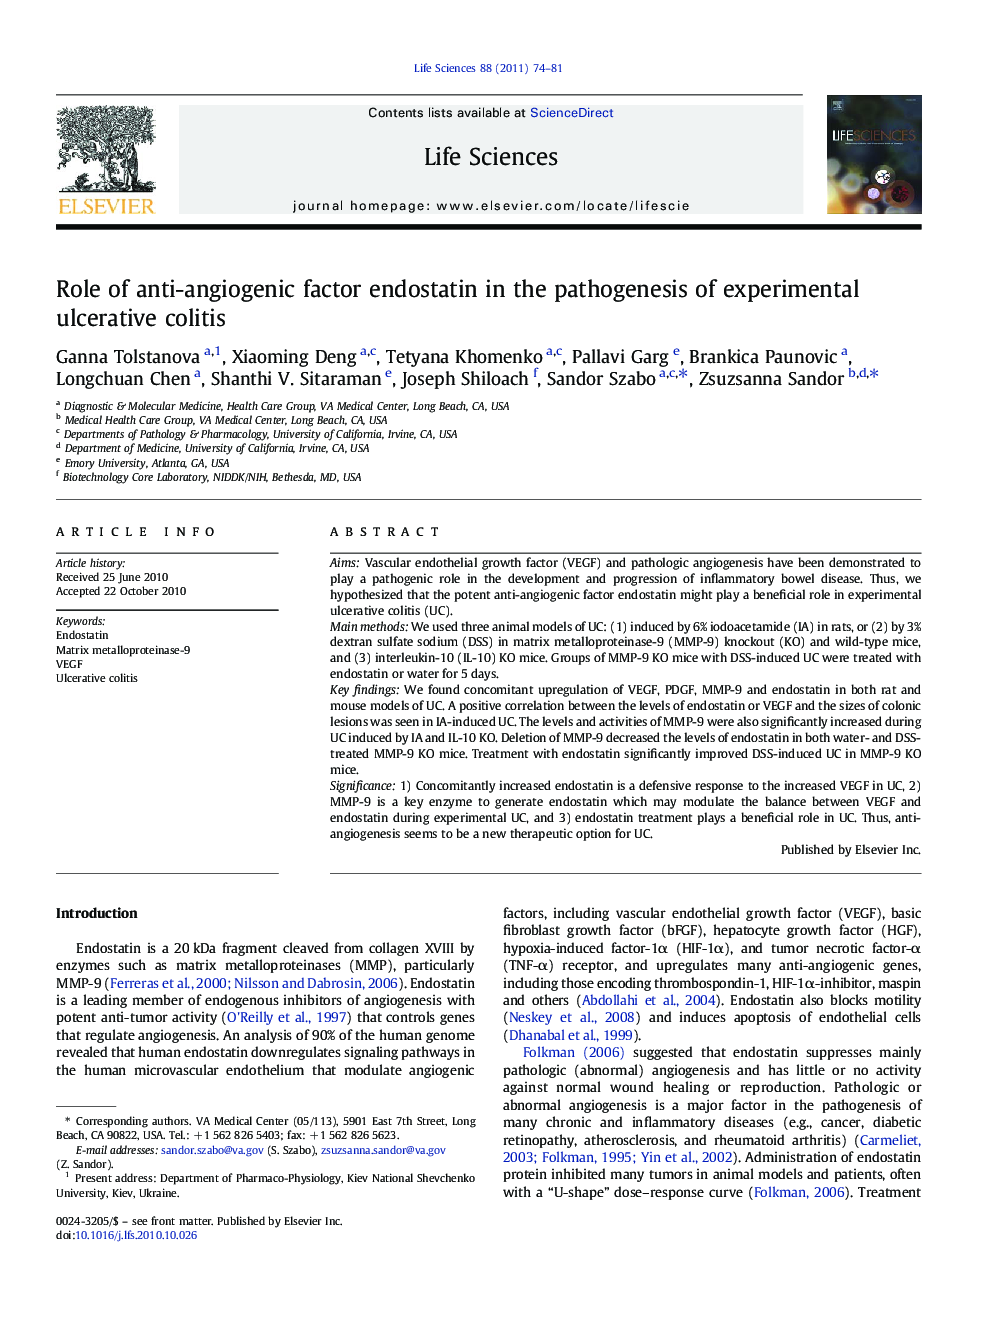 Role of anti-angiogenic factor endostatin in the pathogenesis of experimental ulcerative colitis